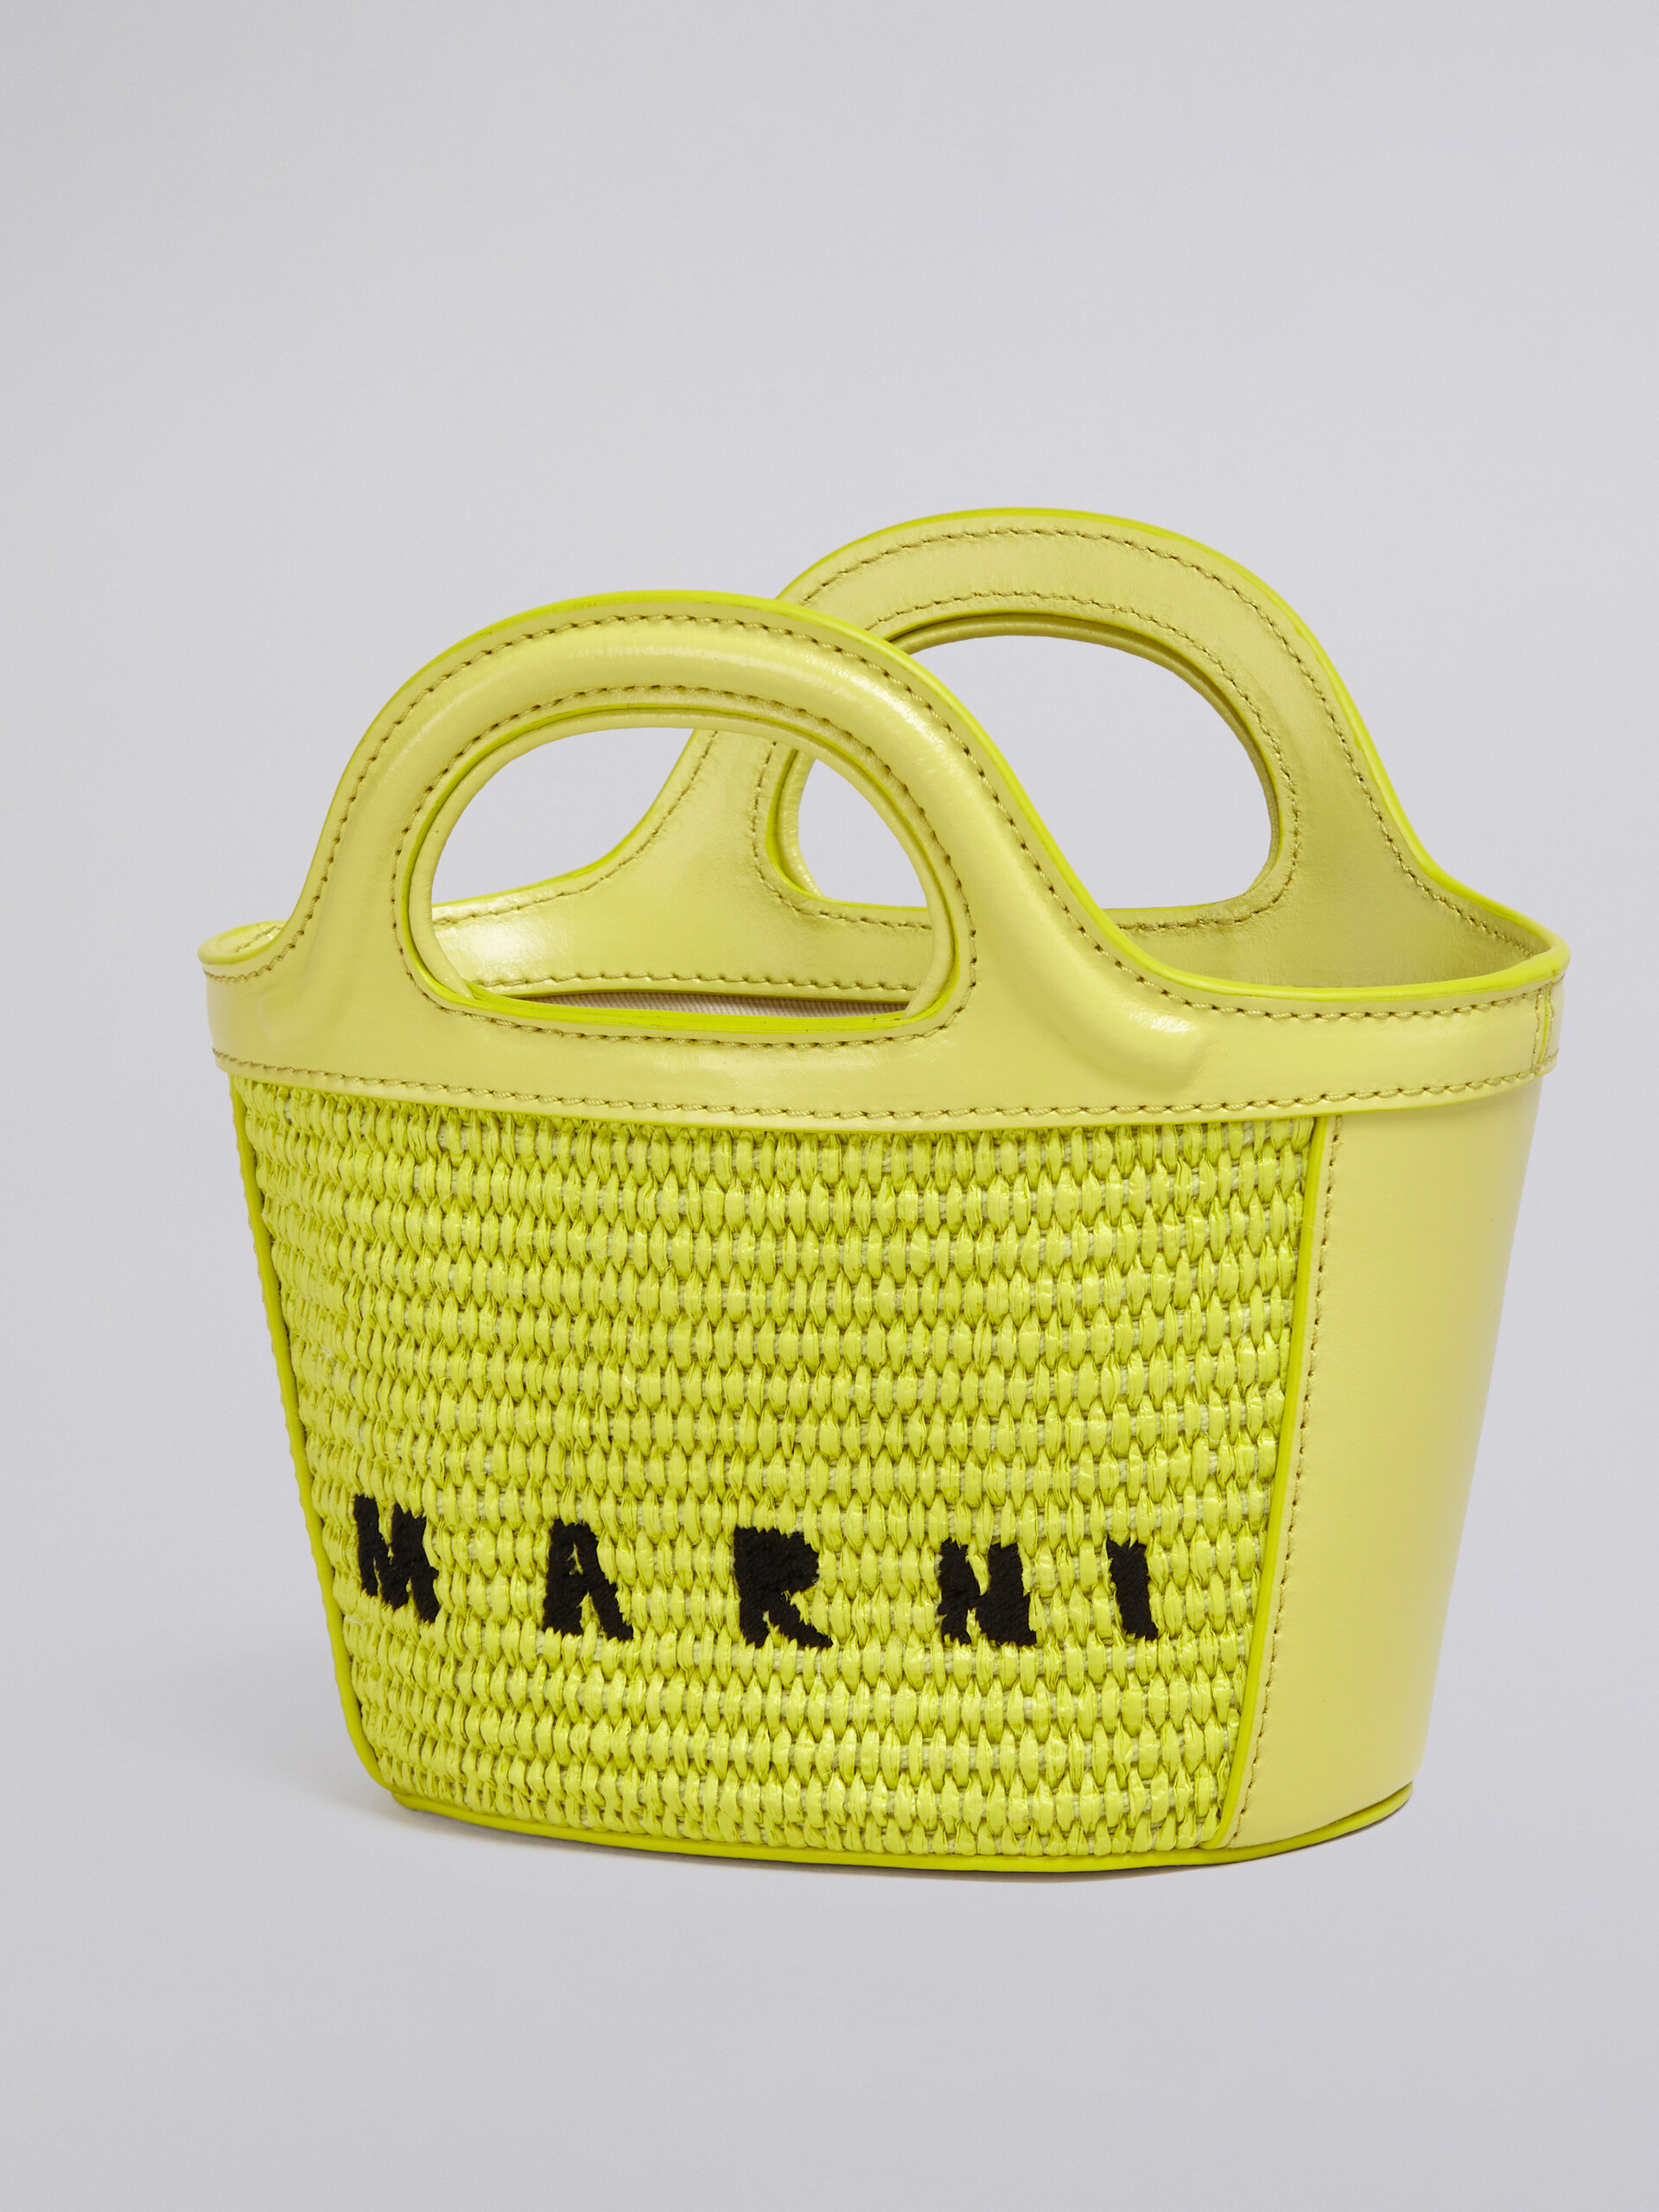 TROPICALIA micro bag in yellow leather and raffia - Handbag - Image 5